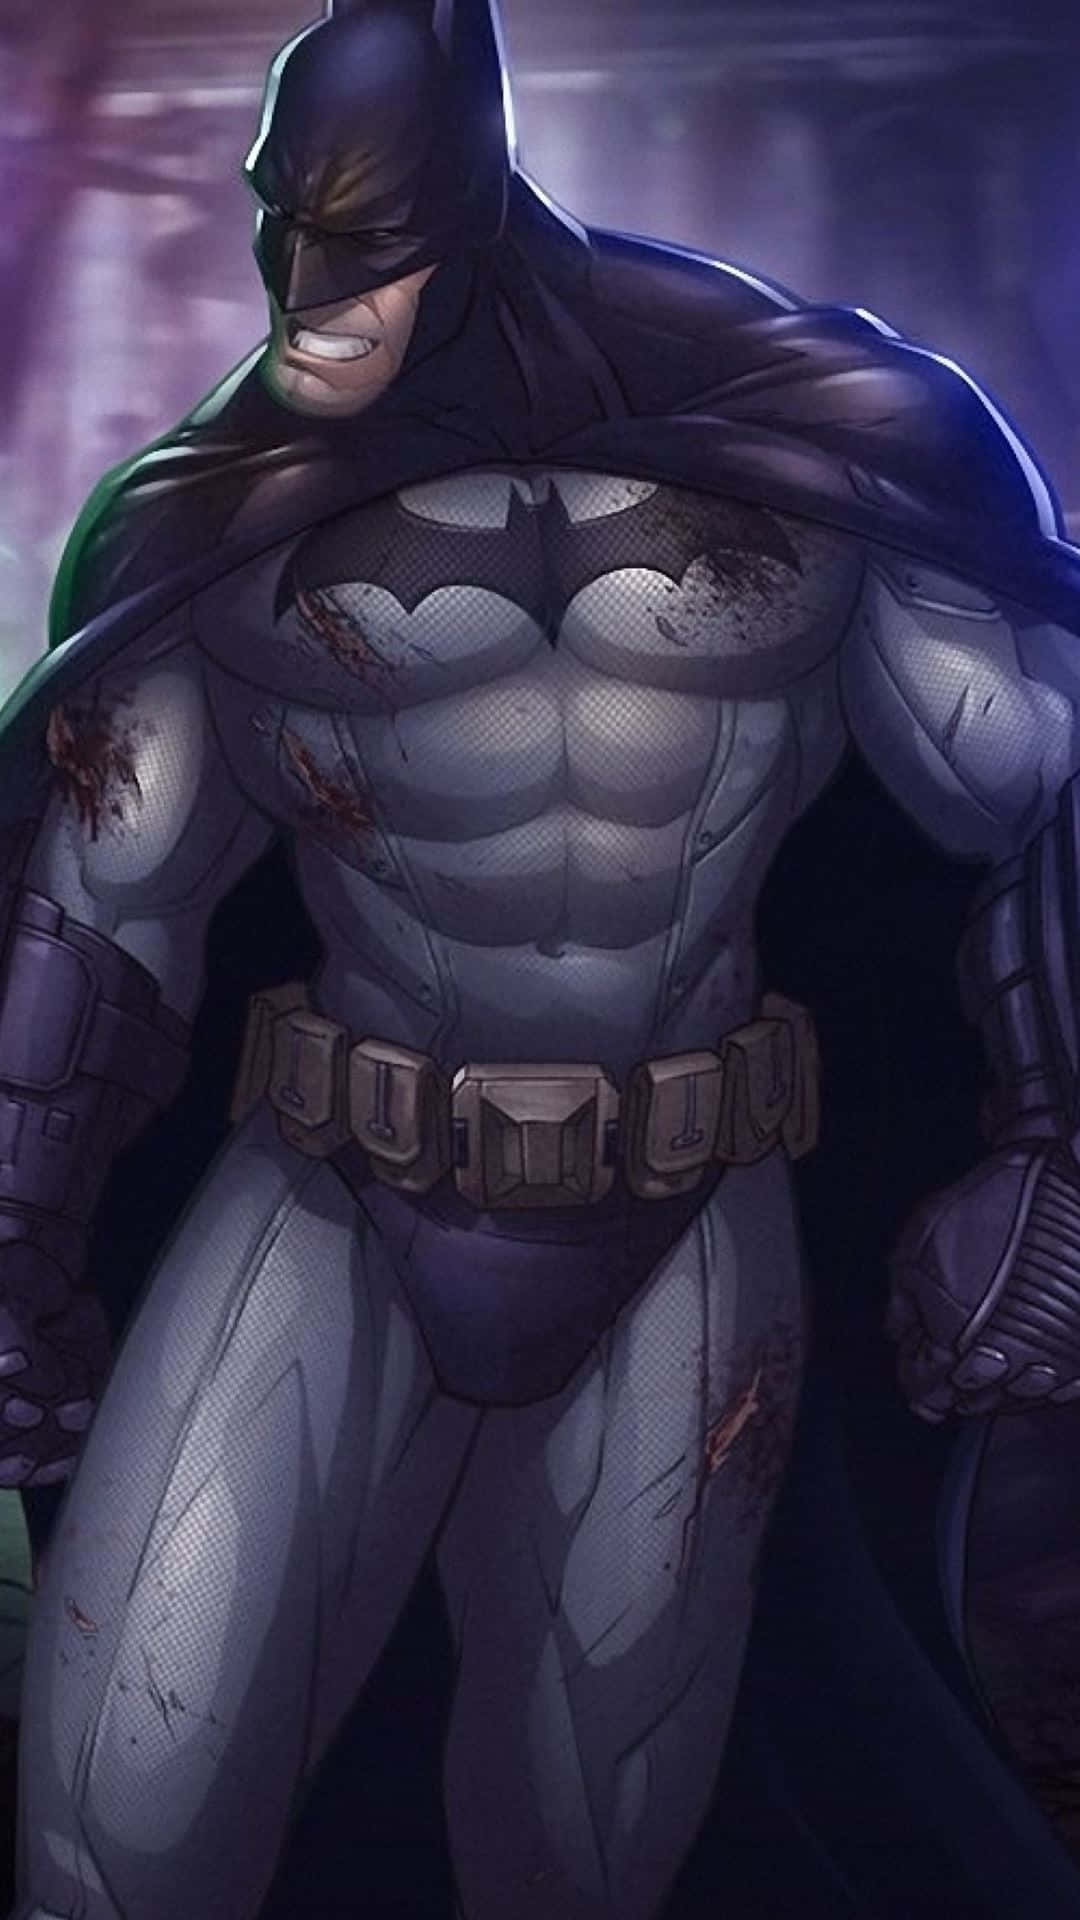 Batman standing tall on a rooftop in Arkham Knight Wallpaper